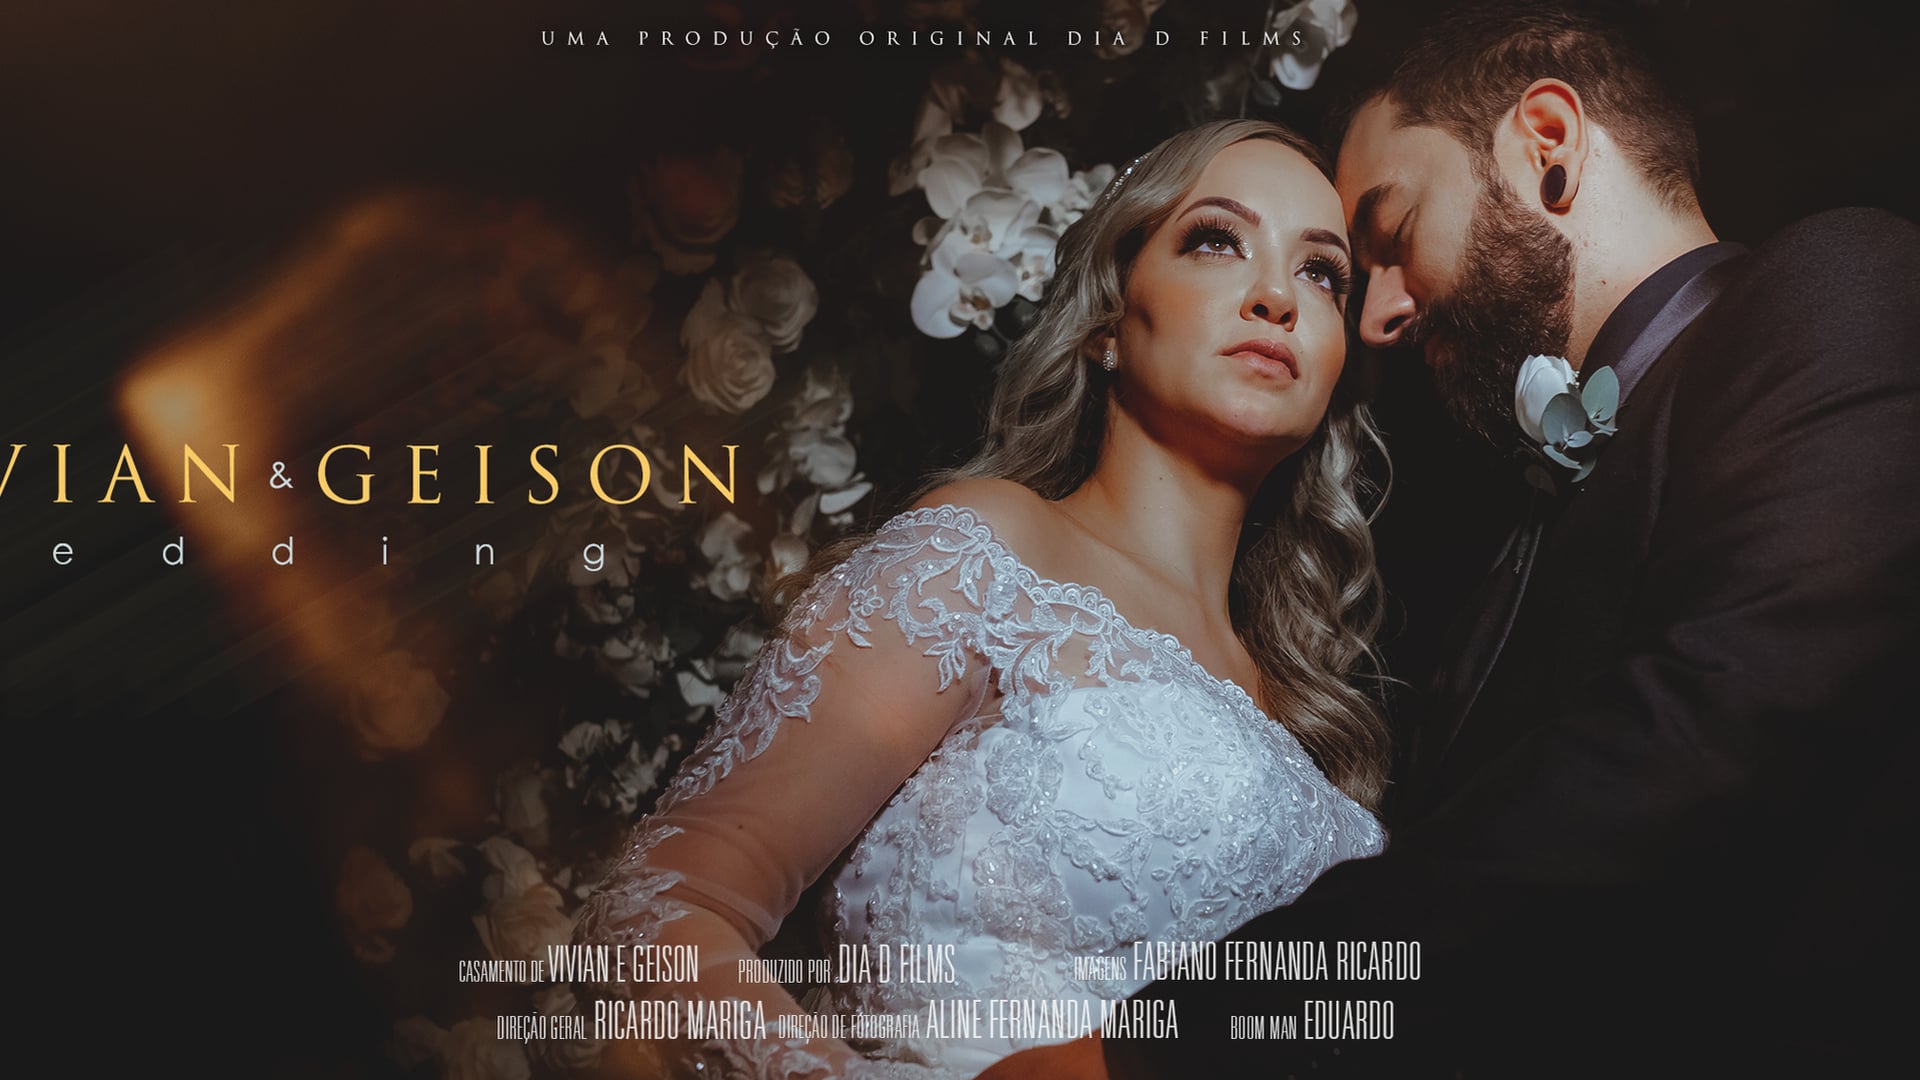 The Wedding - Vivian e Geison - diad films